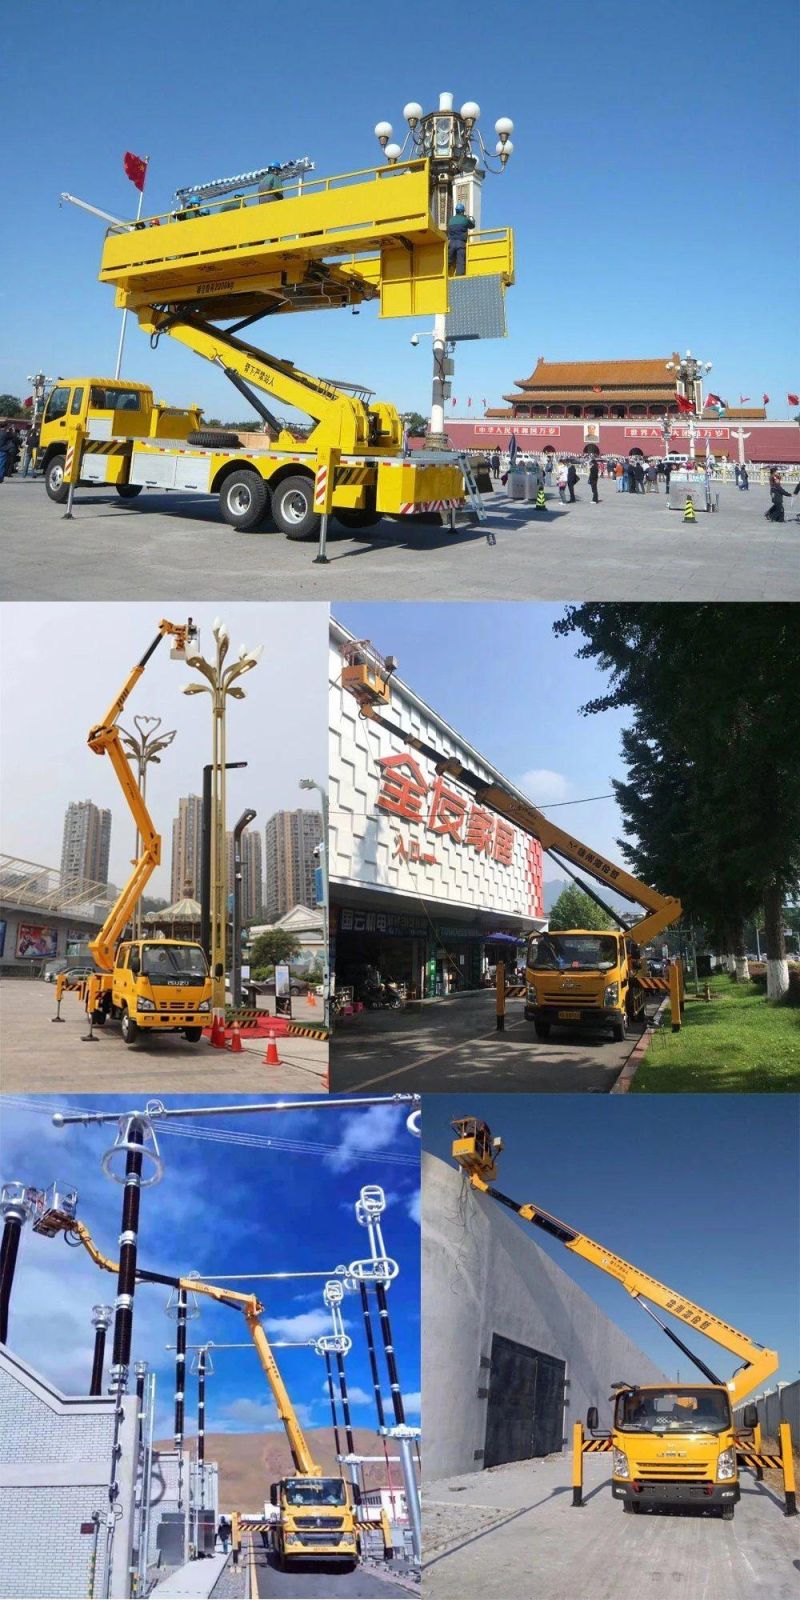 Dongfeng Brand New 18m 20m 24m High-Altitude Operation Truck Japanese Telescopic High Lifting Platform Truck